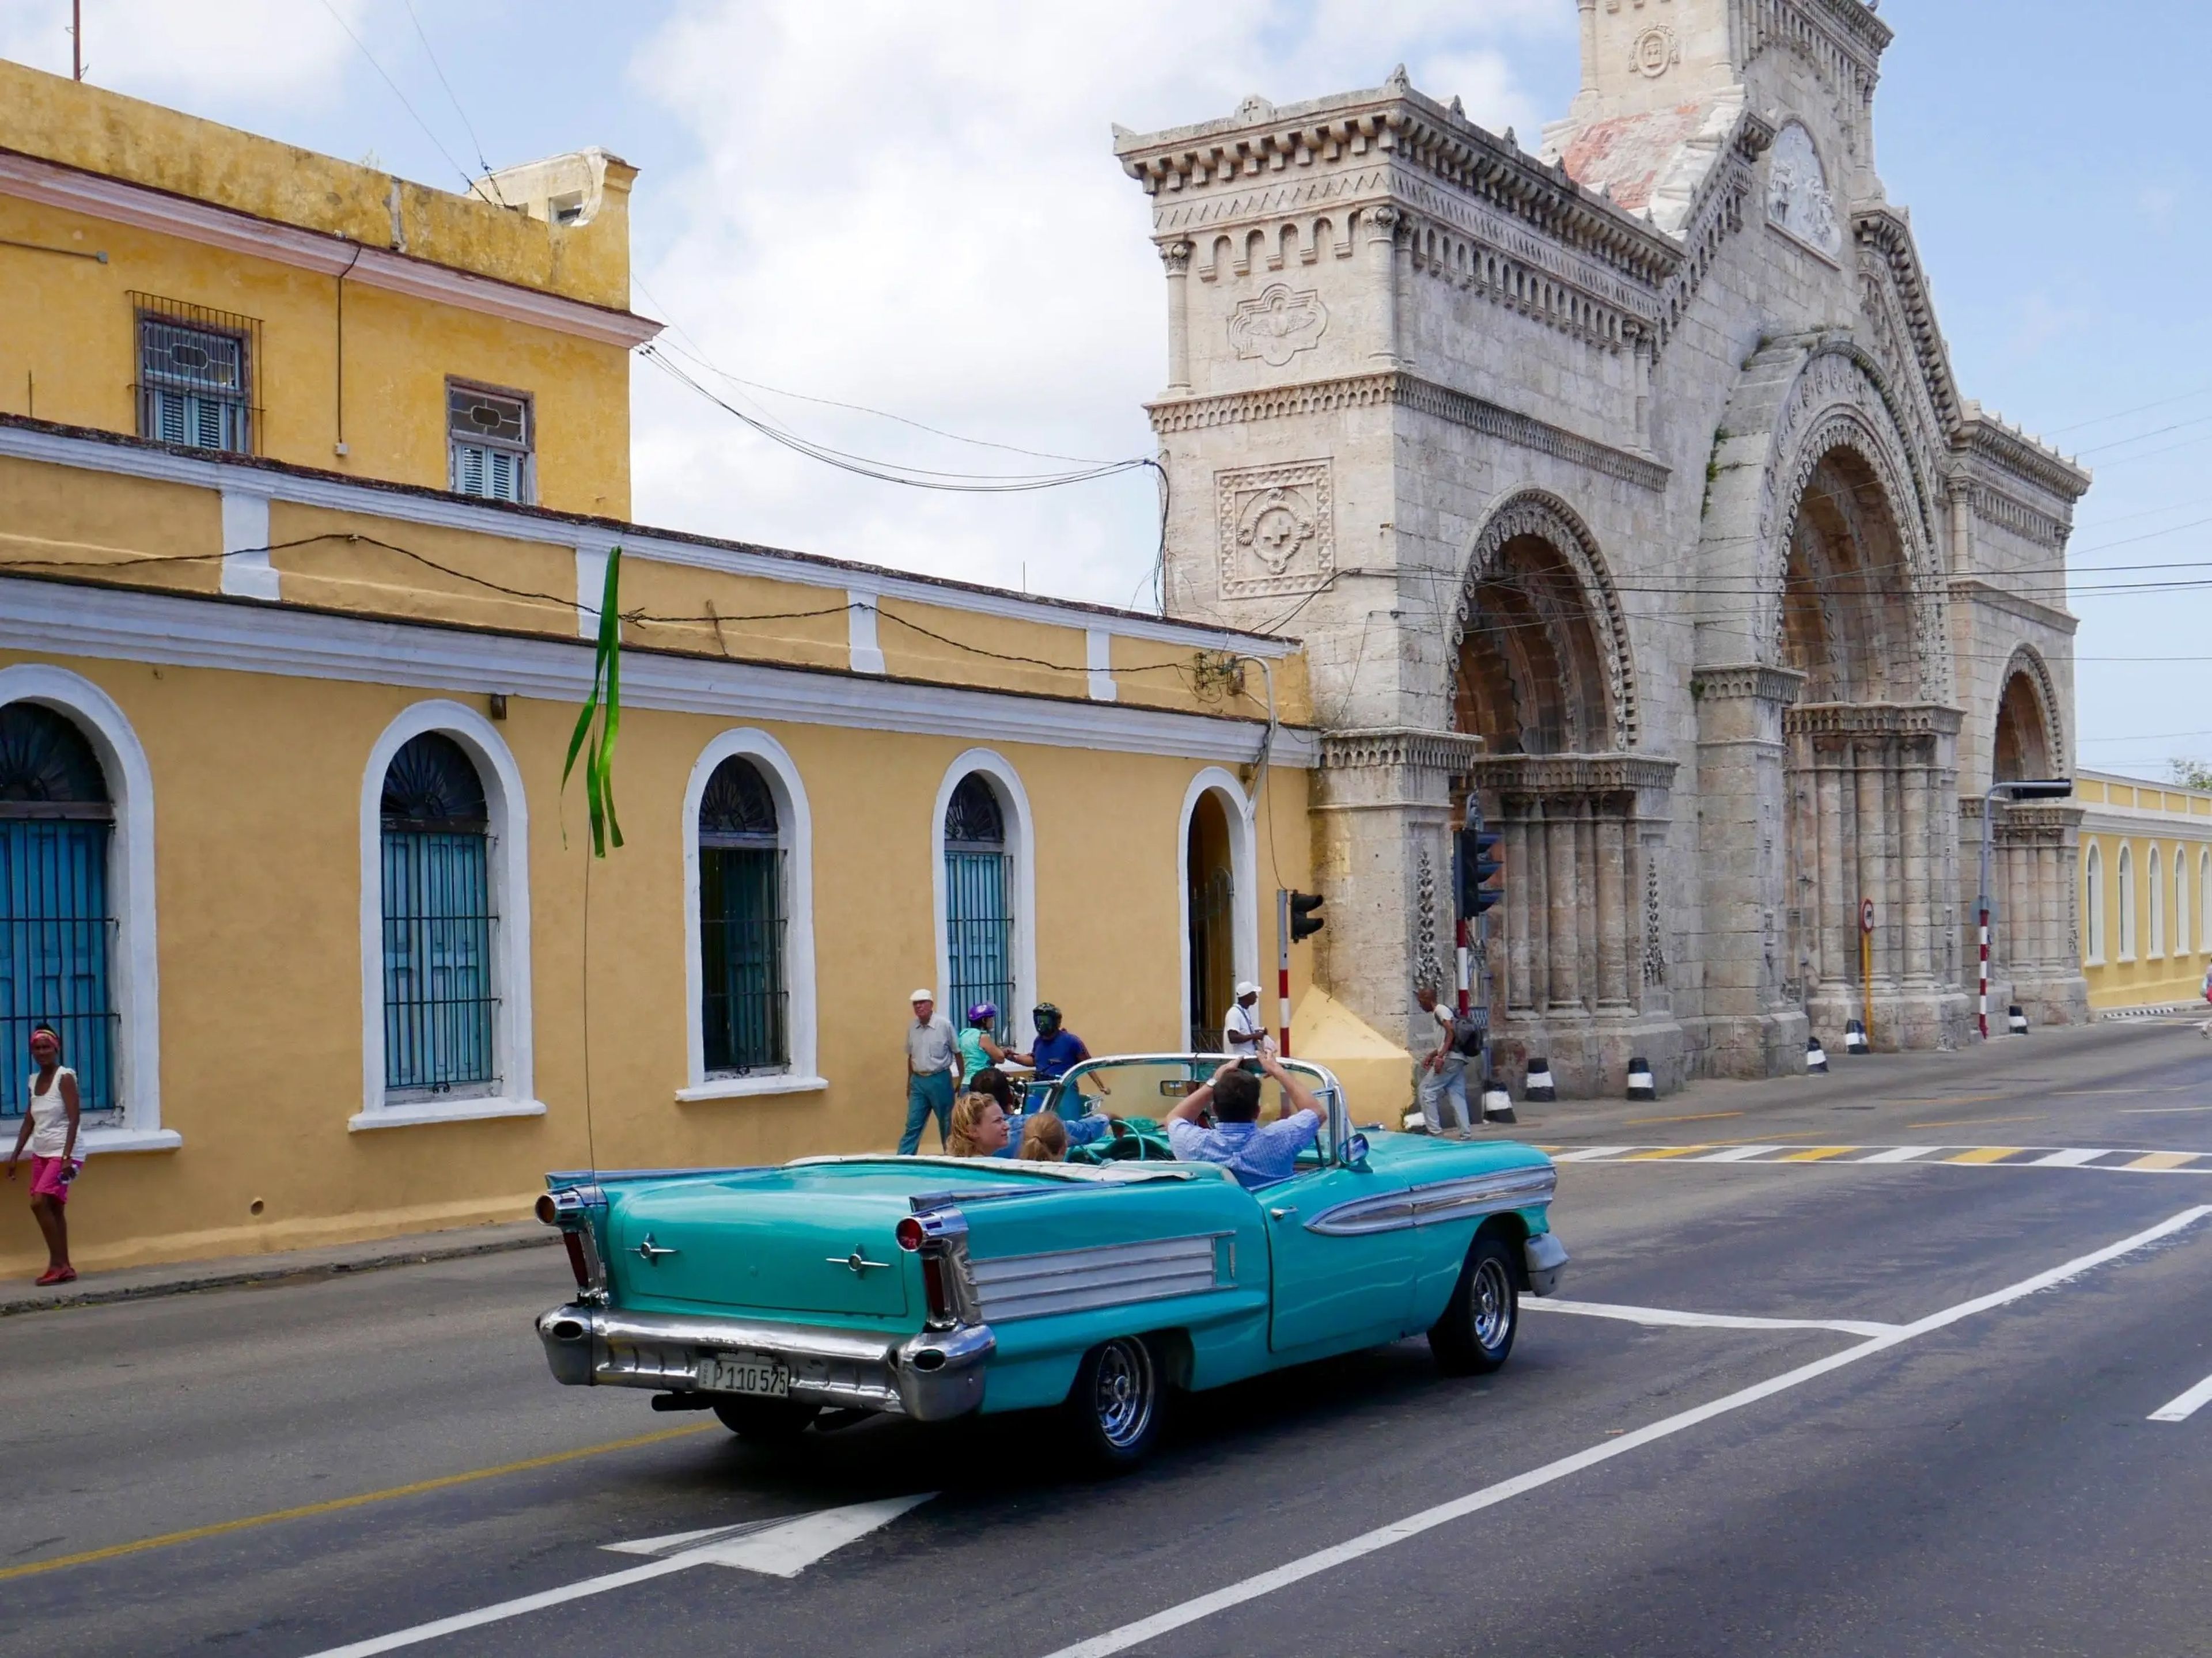 A car in Havana, Cuba.